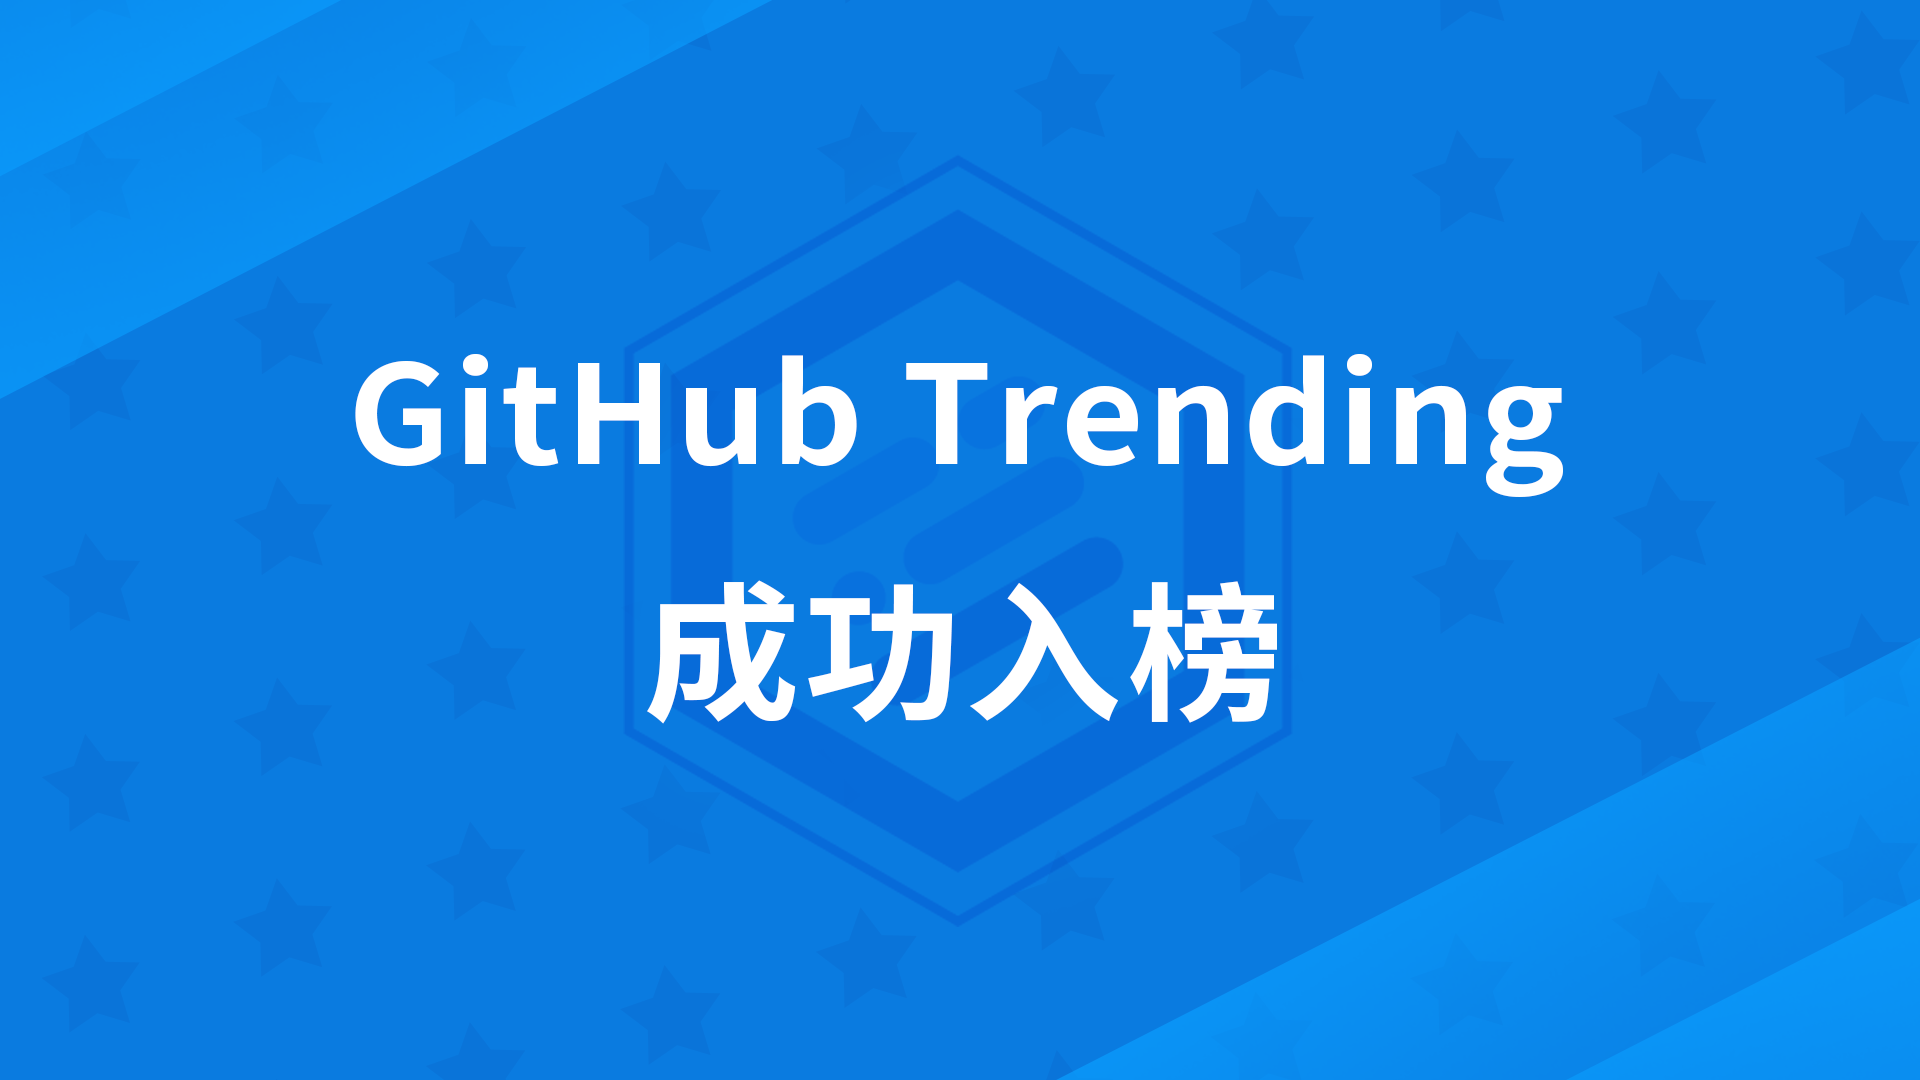 FIT2CLOUD飞致云旗下开源项目DataEase成功进入GitHub趋势榜主榜